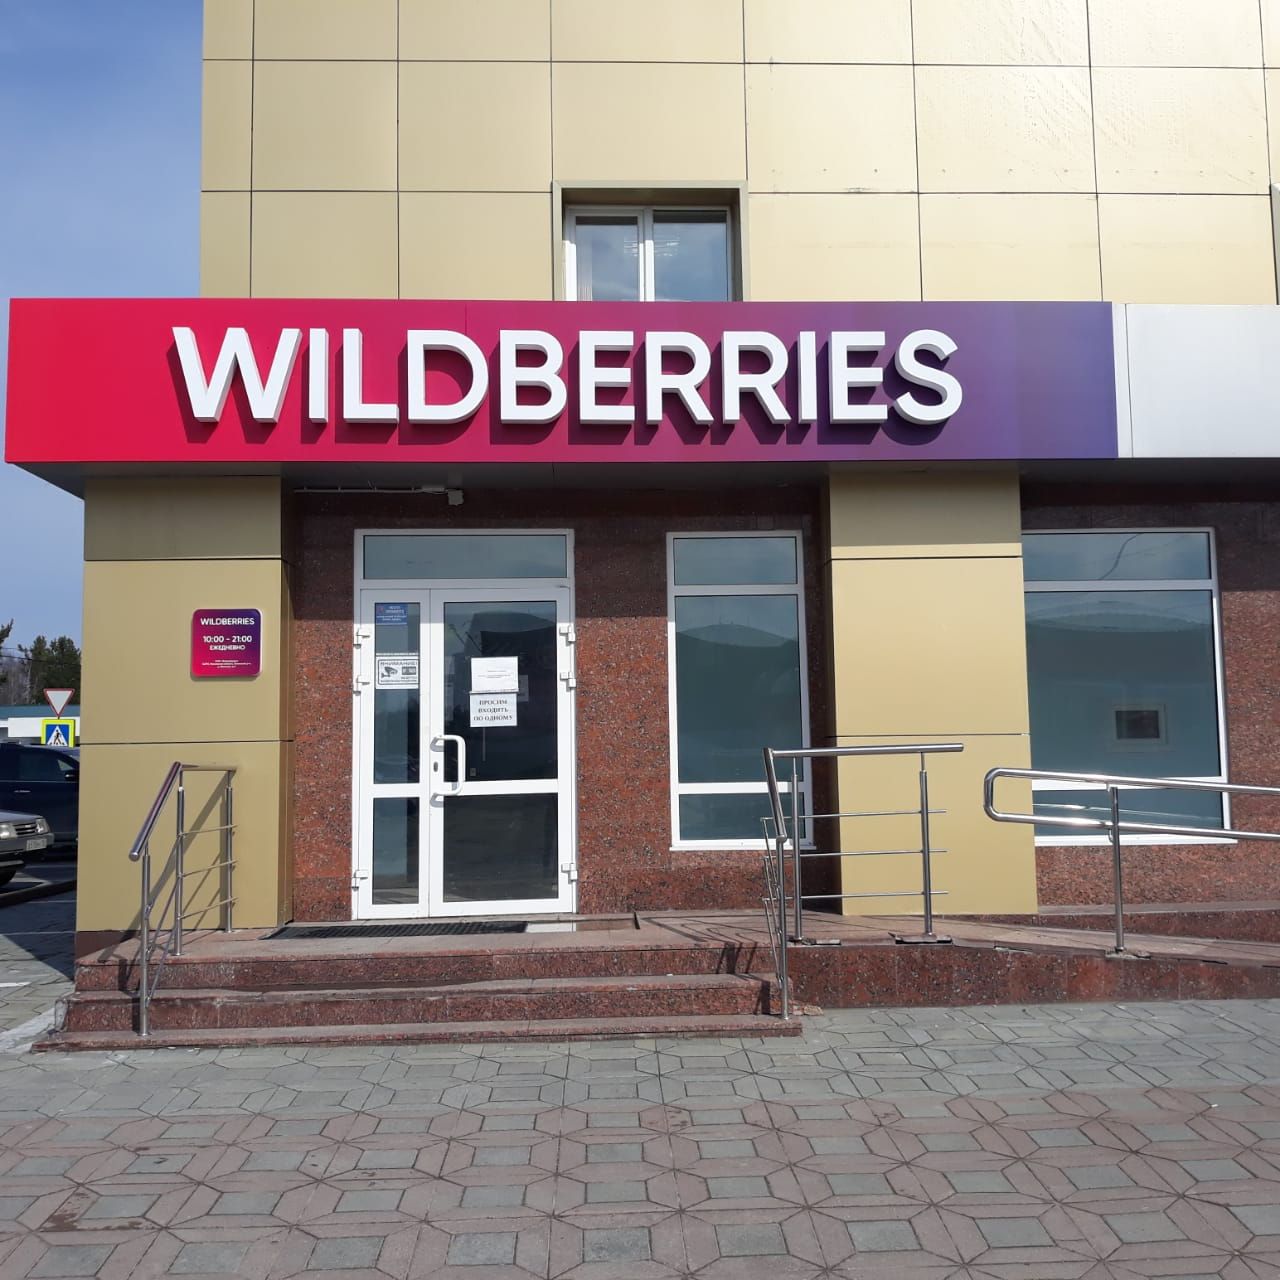 Https portal wildberries. Wildberries Company. Wildberries портал для сотрудников.